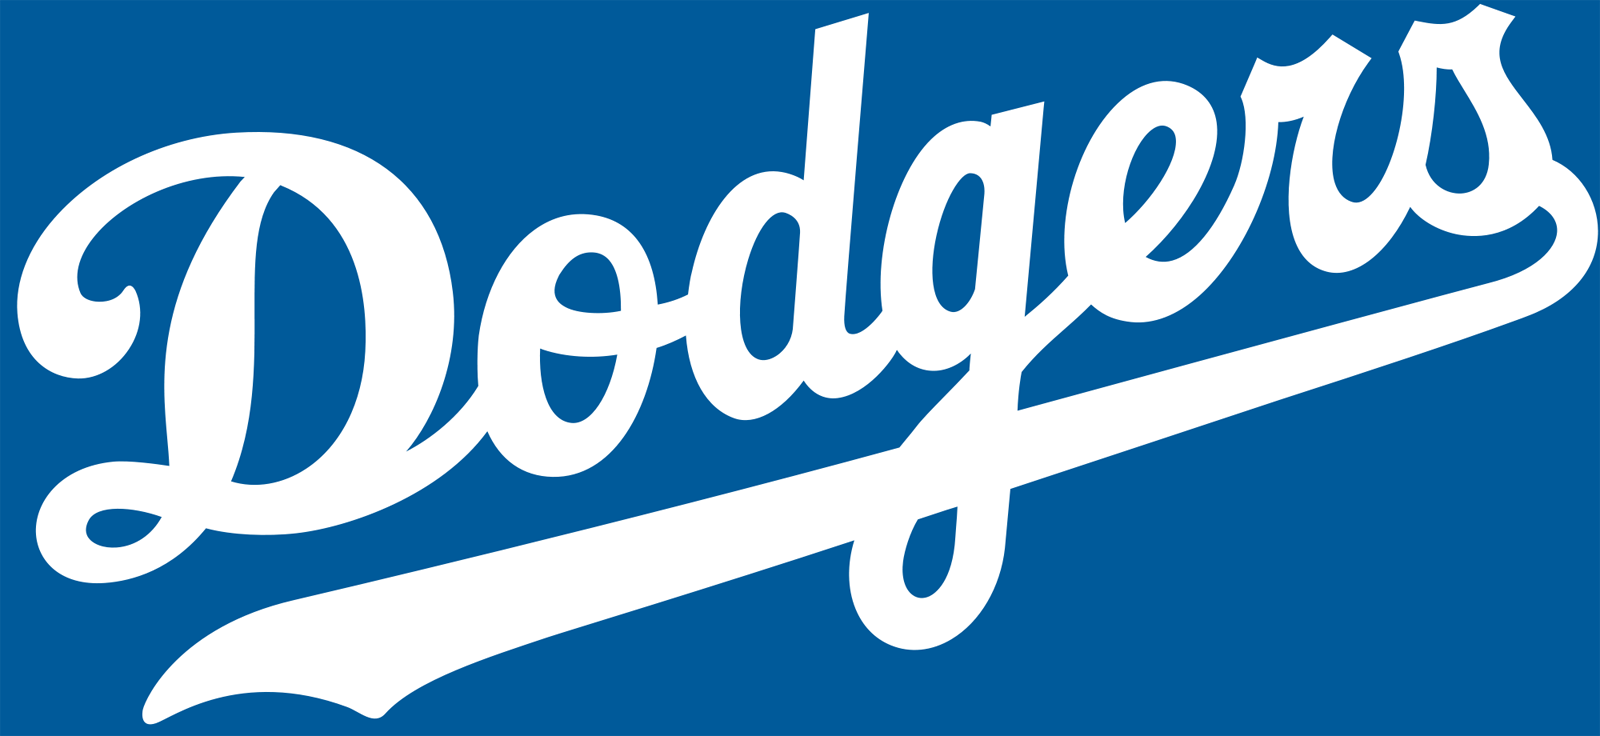 Font Los Angeles Dodgers Logo.